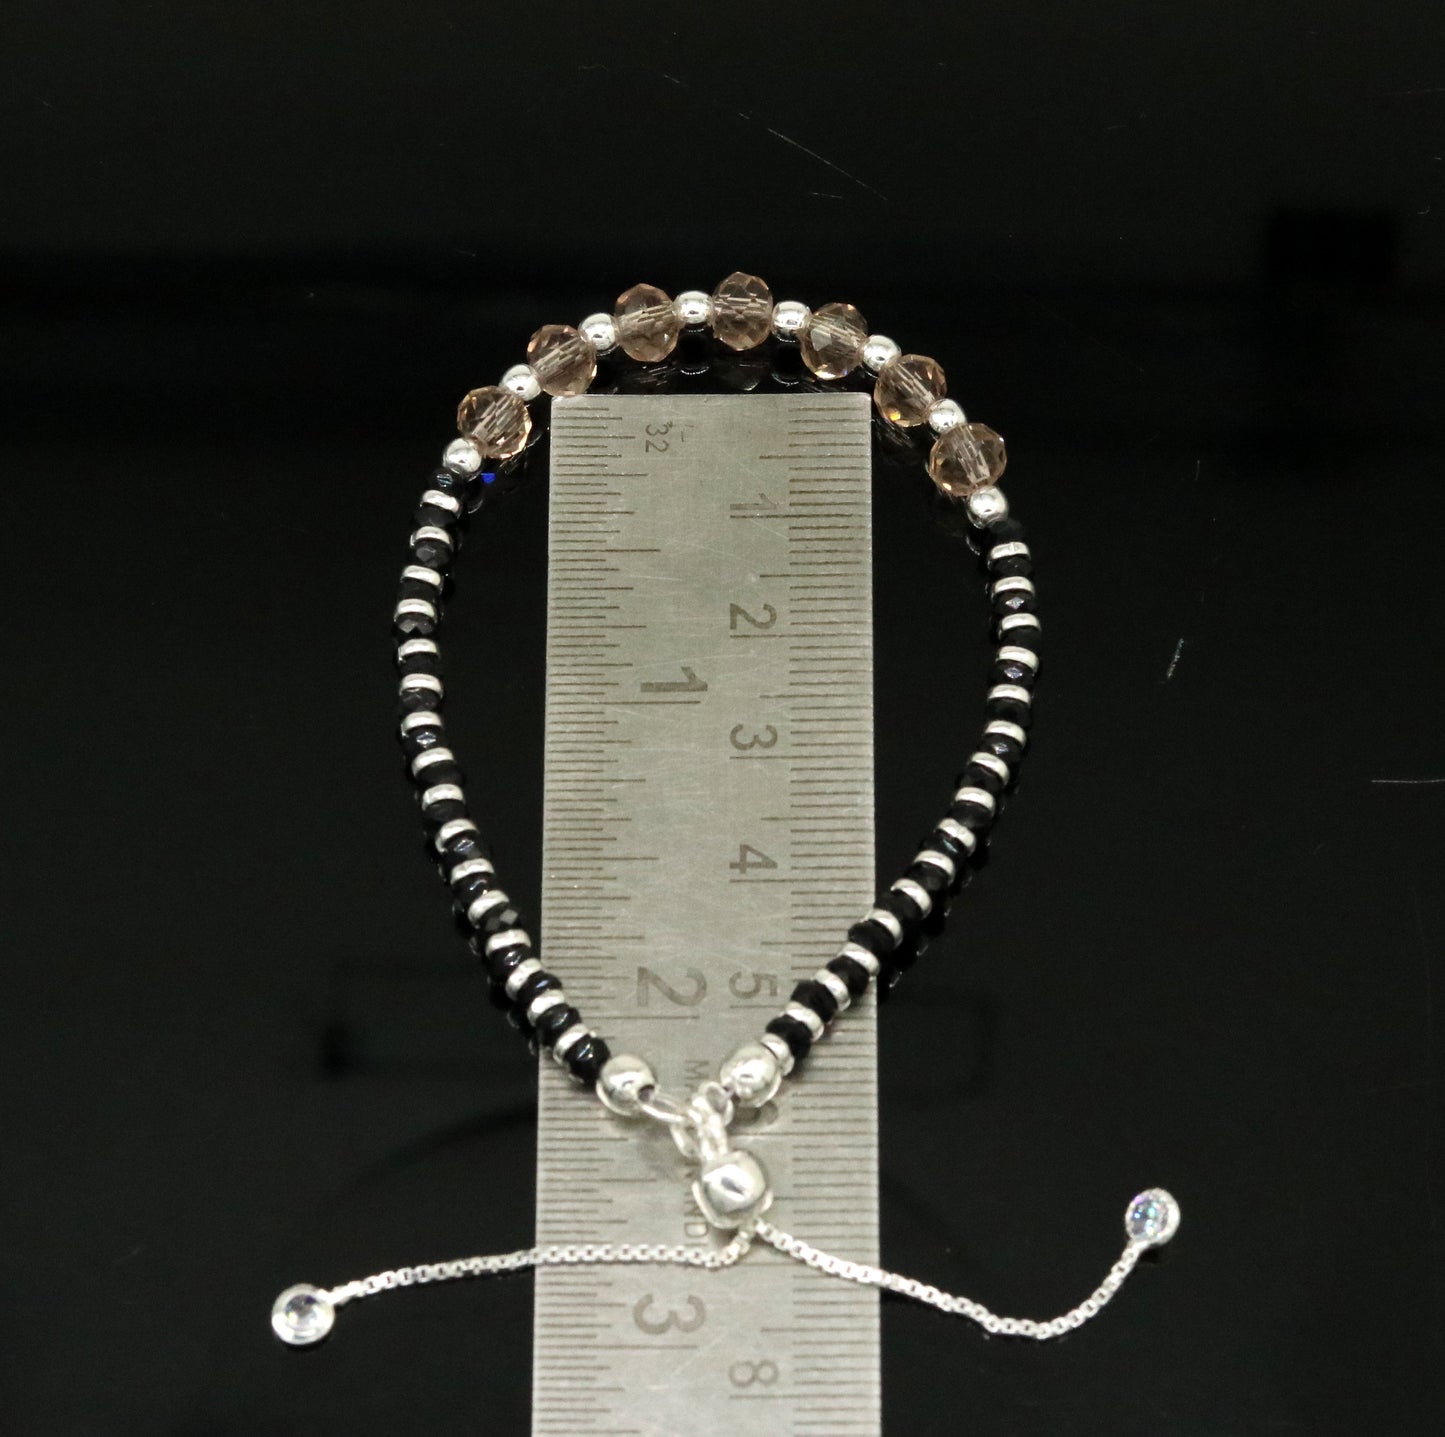 Stylish 925 sterling silver beaded with black onyx stone handmade charm adjustable bracelet 'Nazariya' charm jewelry for girls sbr180 - TRIBAL ORNAMENTS